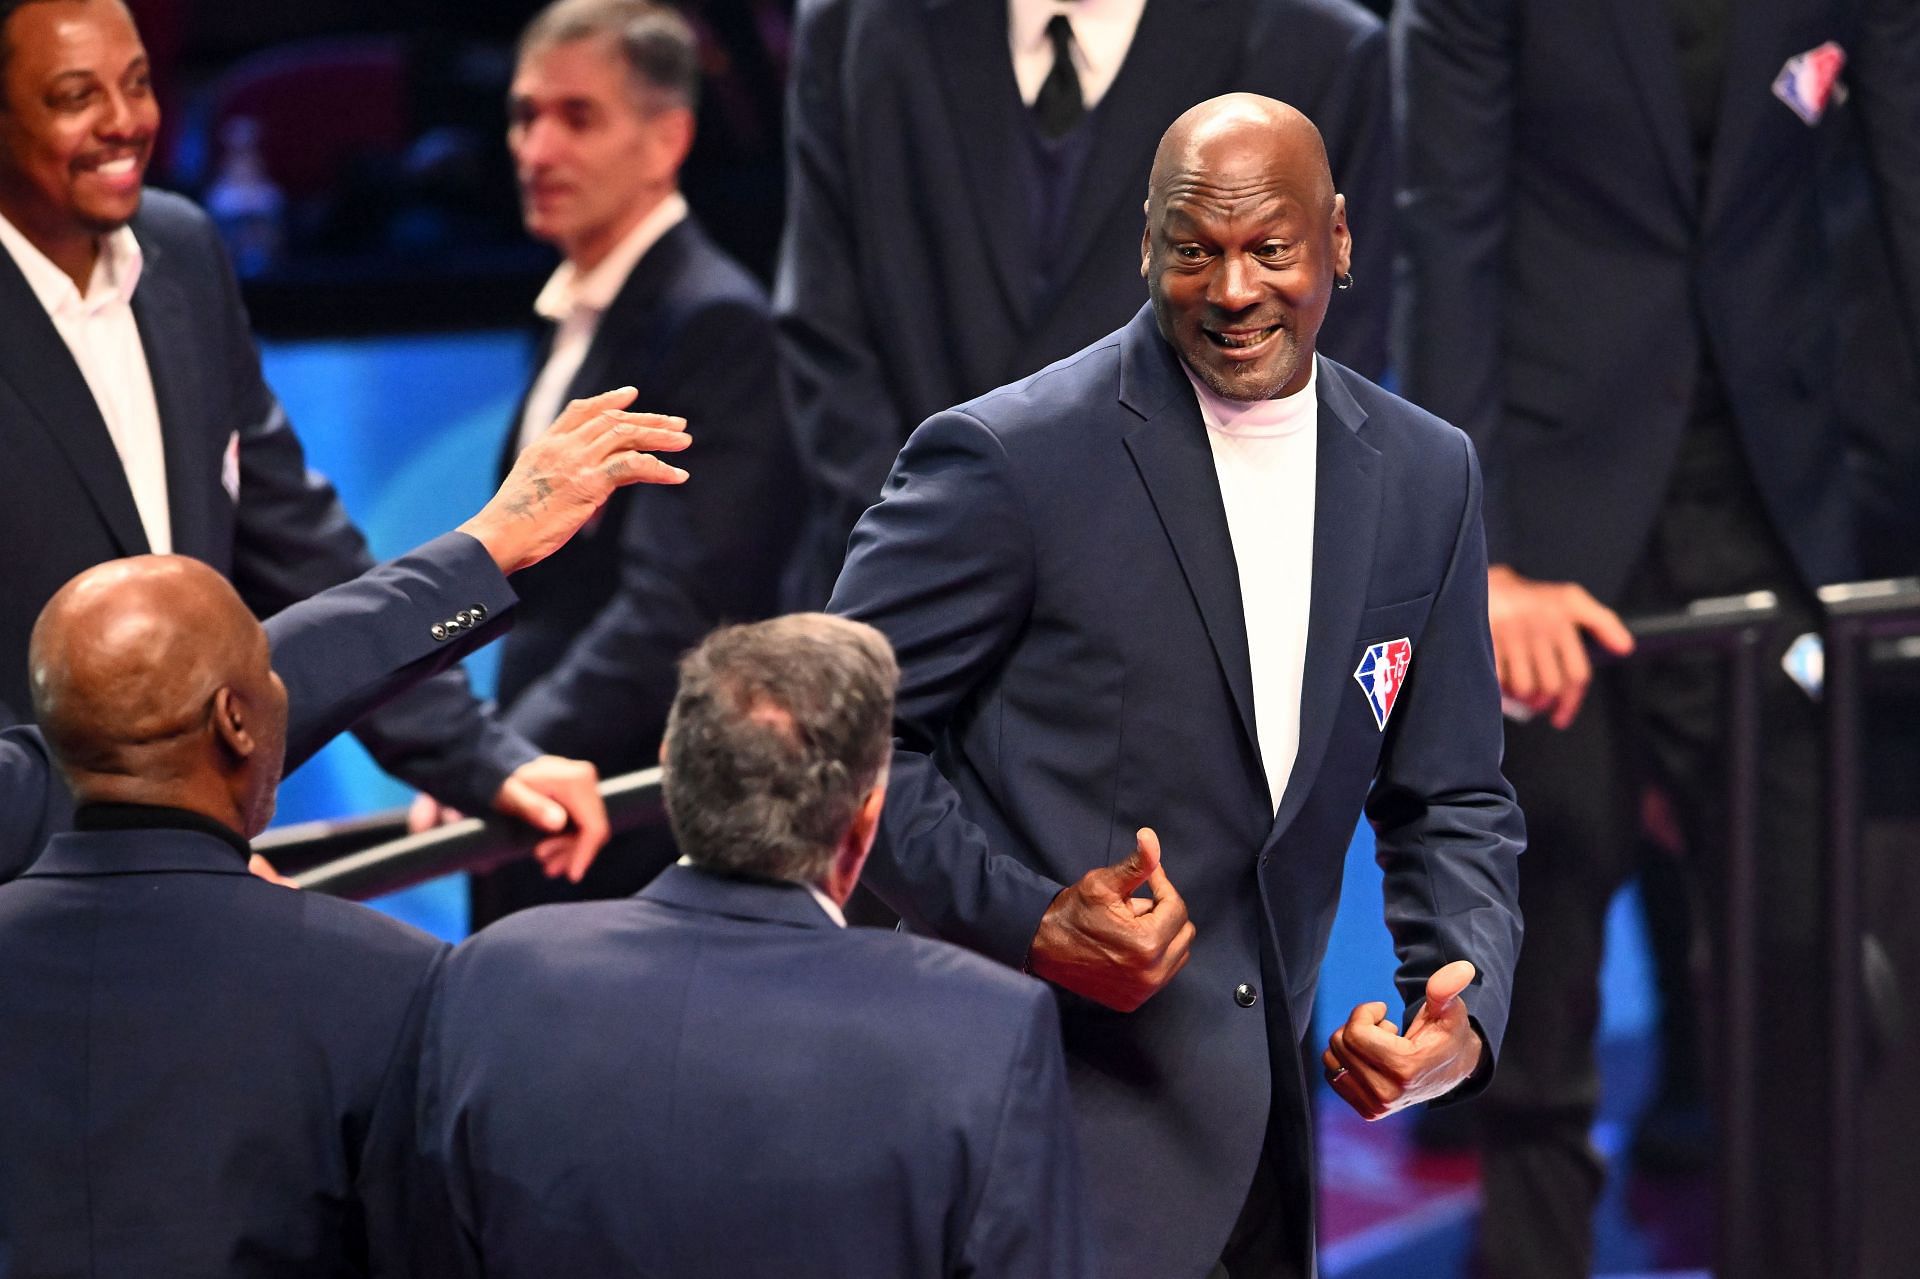 Michael Jordan is the ultimate trash talker, even after retirement 😂 (via @ nba, @coachspoon2, @clairecroox10, @nbahistory, @nba2k)